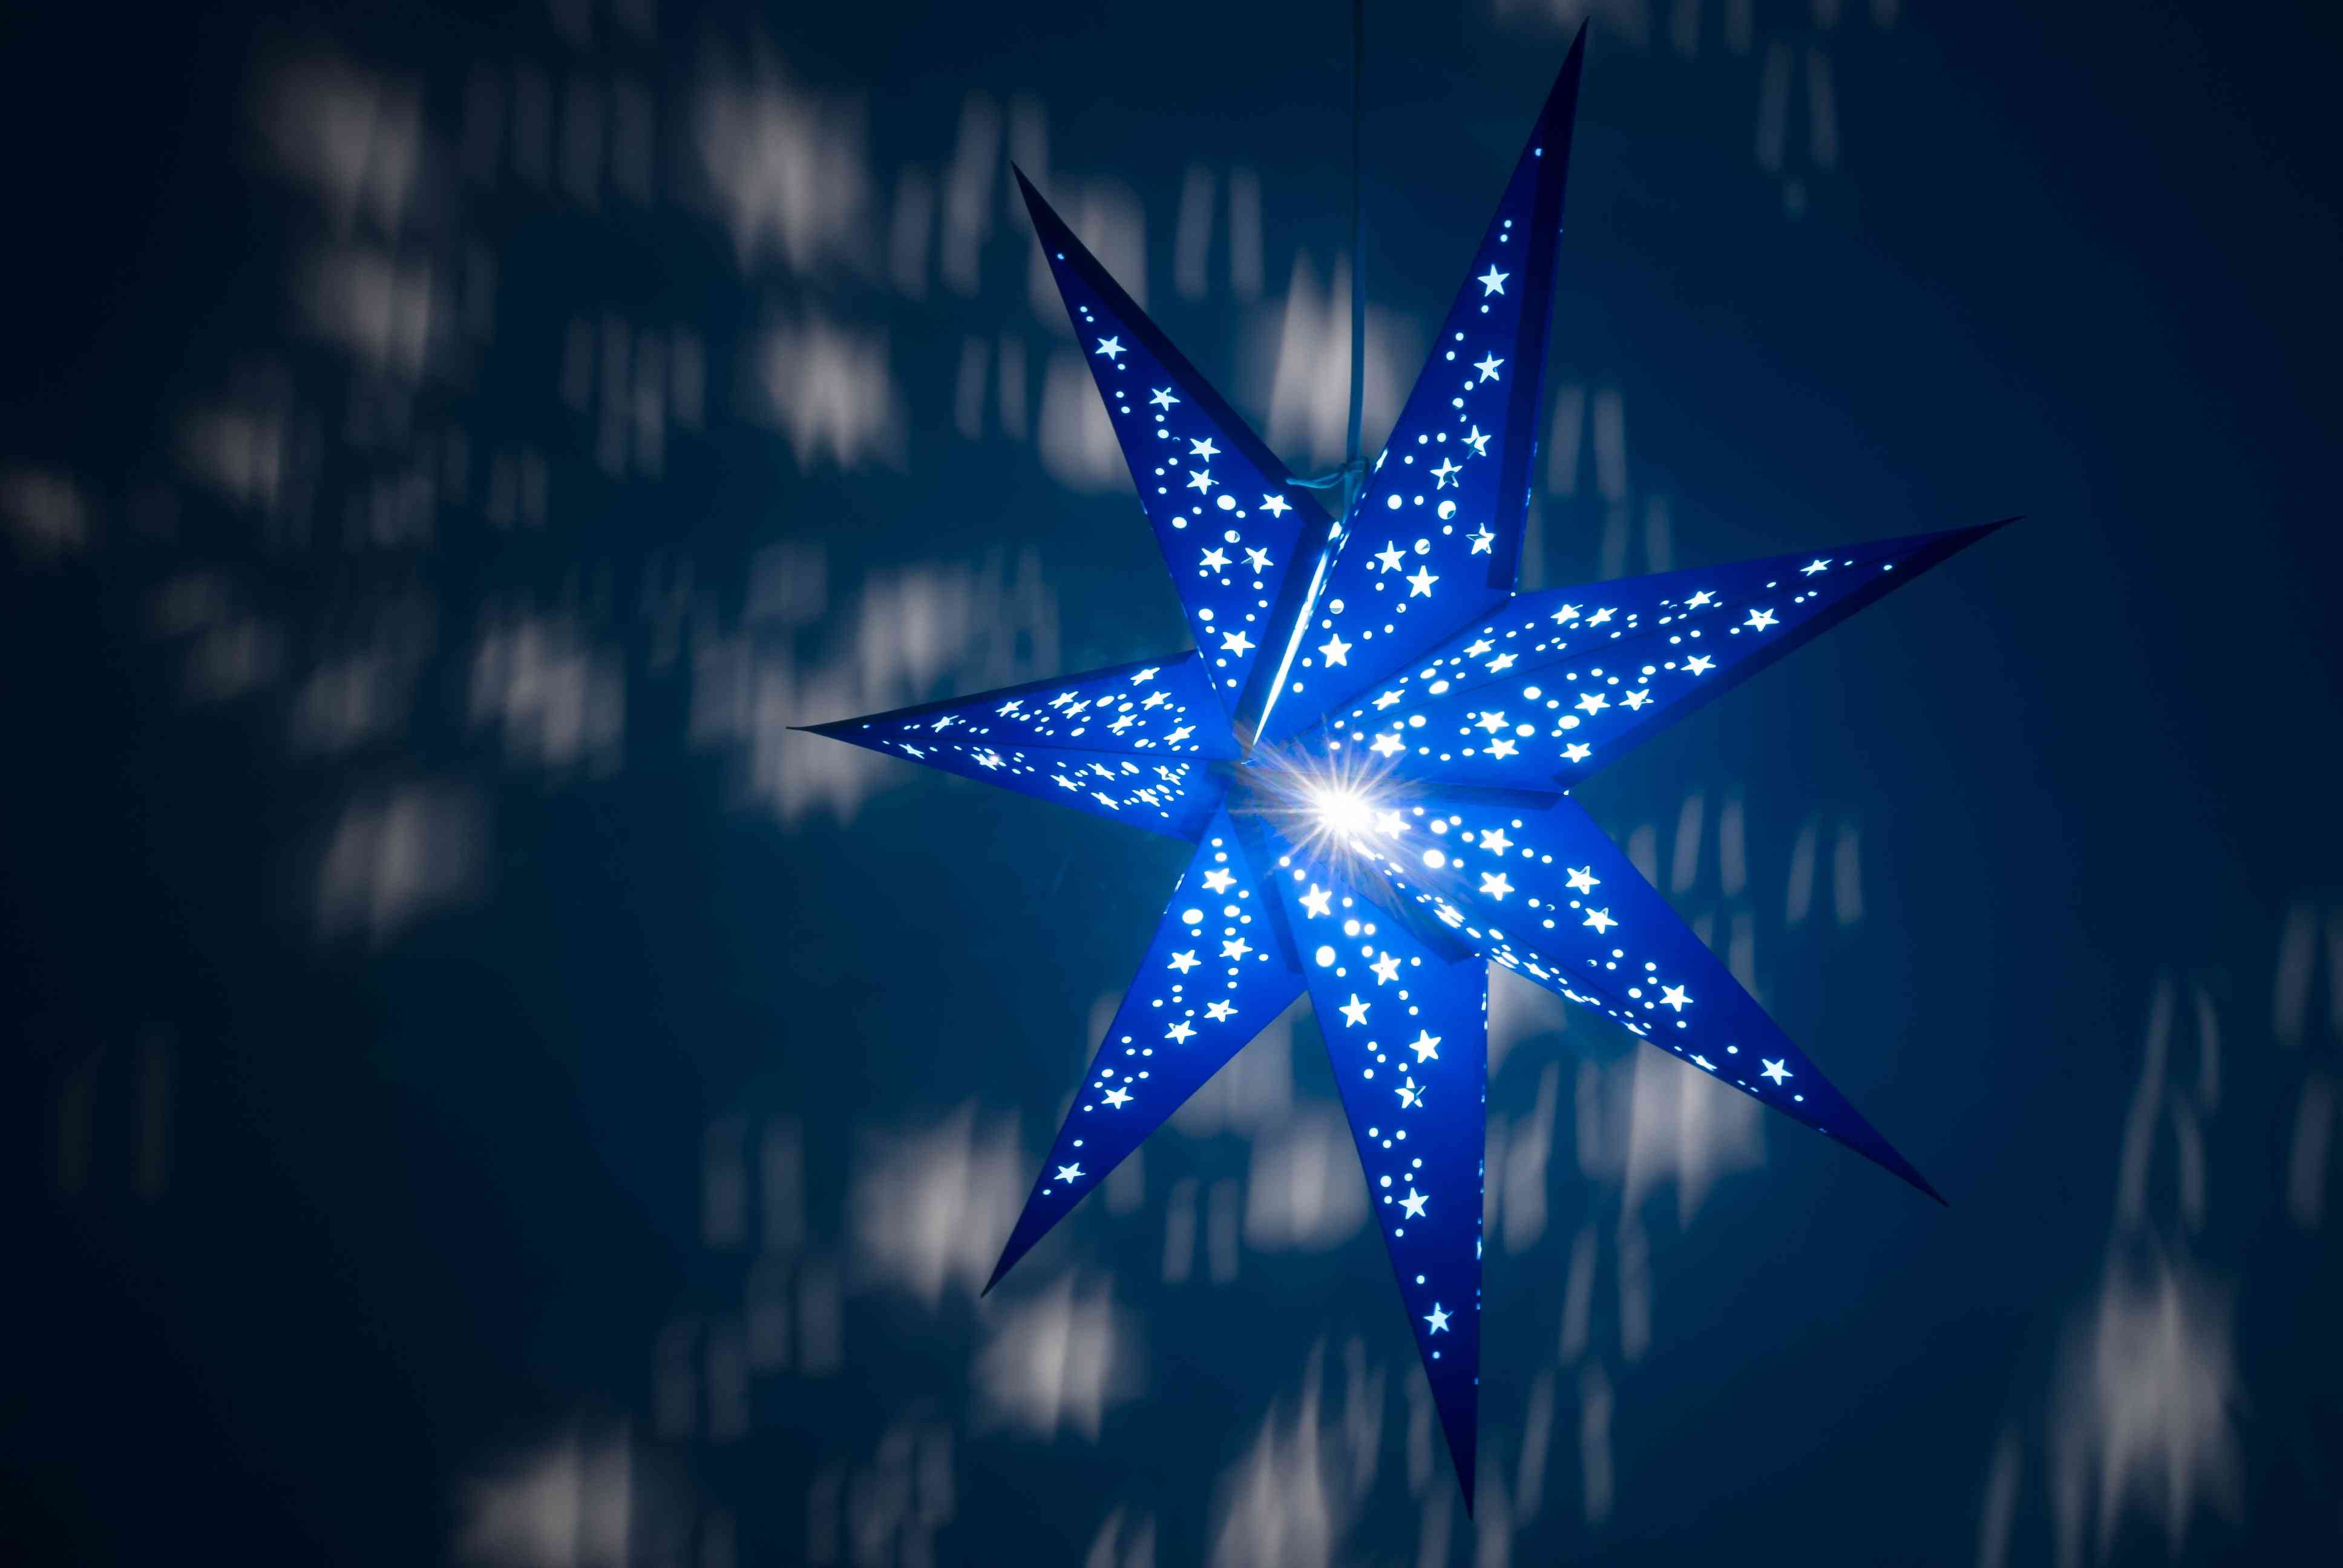 Venus: Blue - Handmade 7 Pointed Paper Star Lampshade